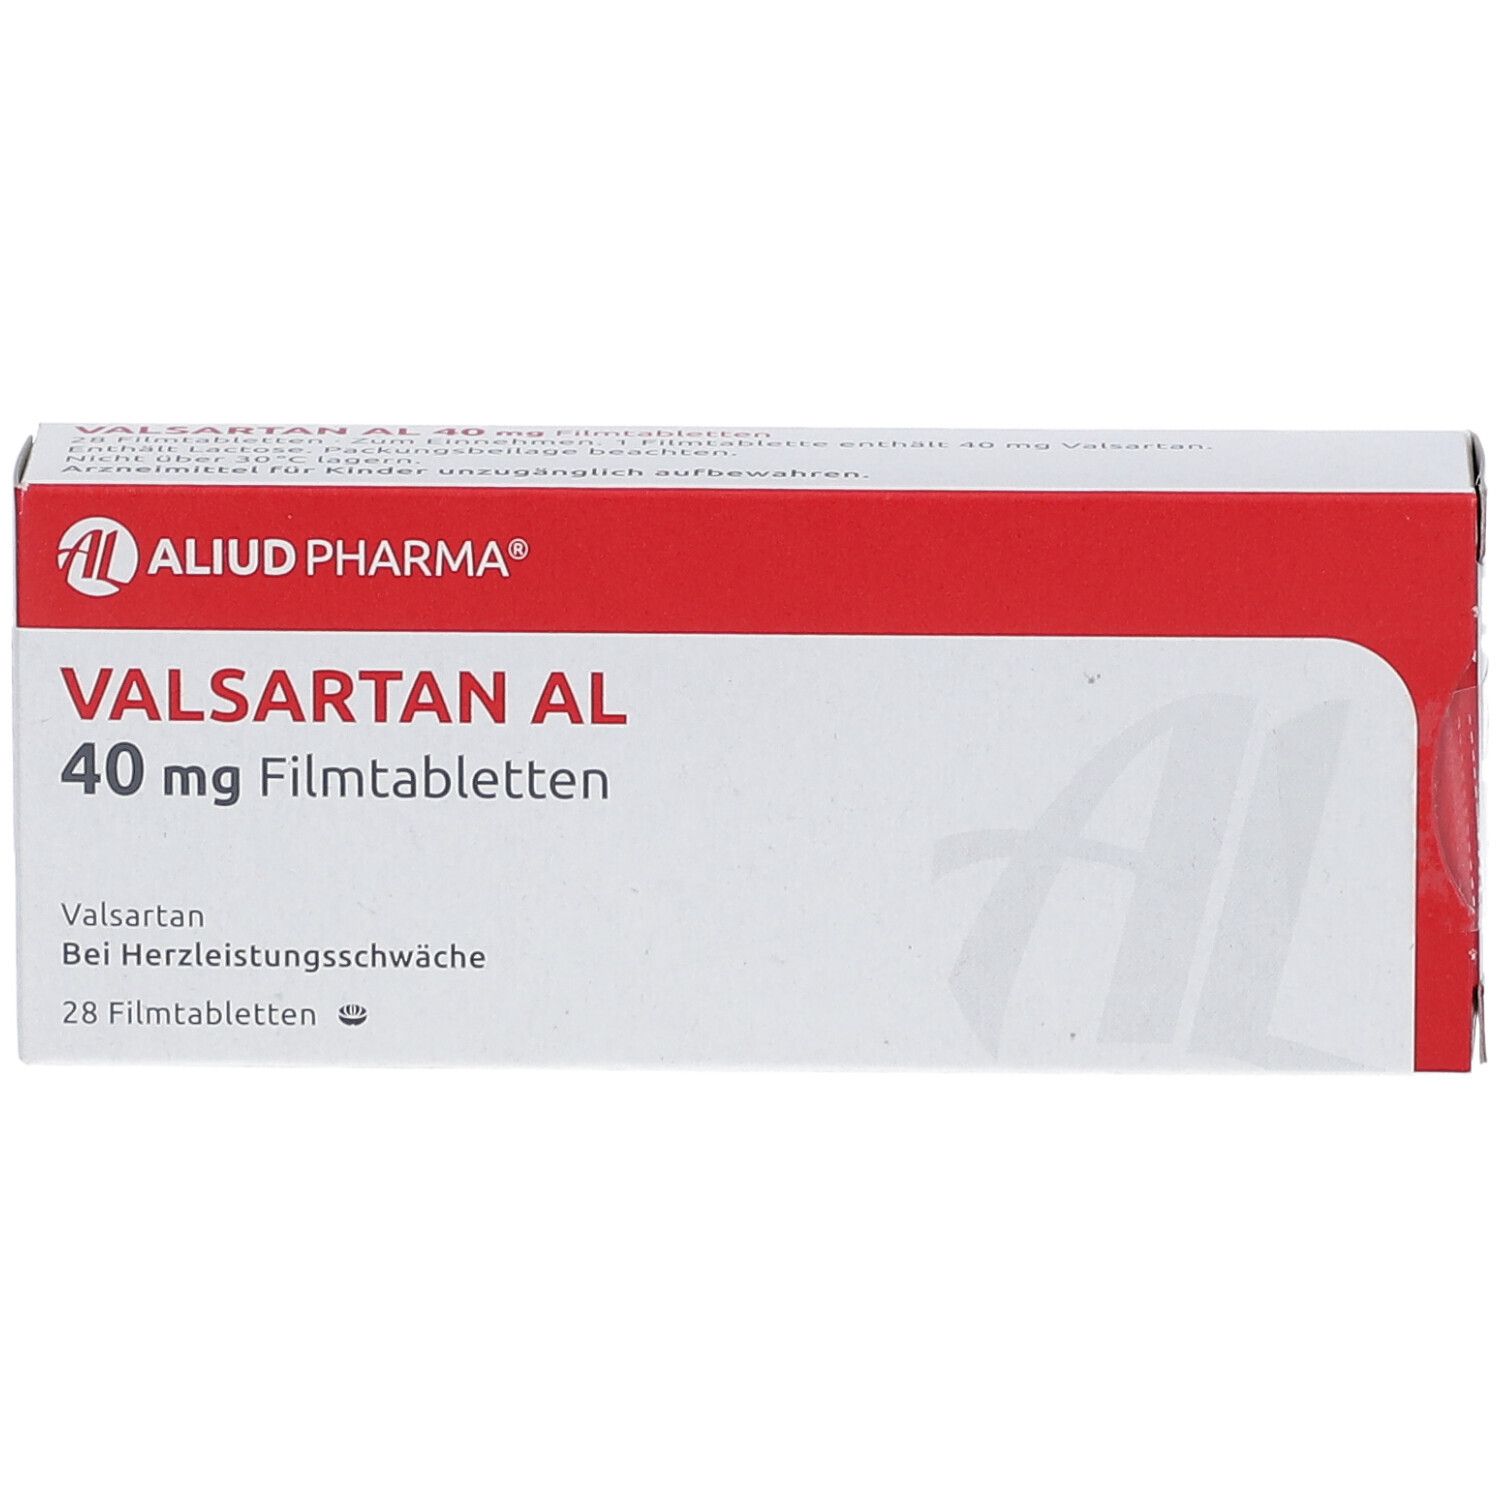 Valsartan AL 40 mg